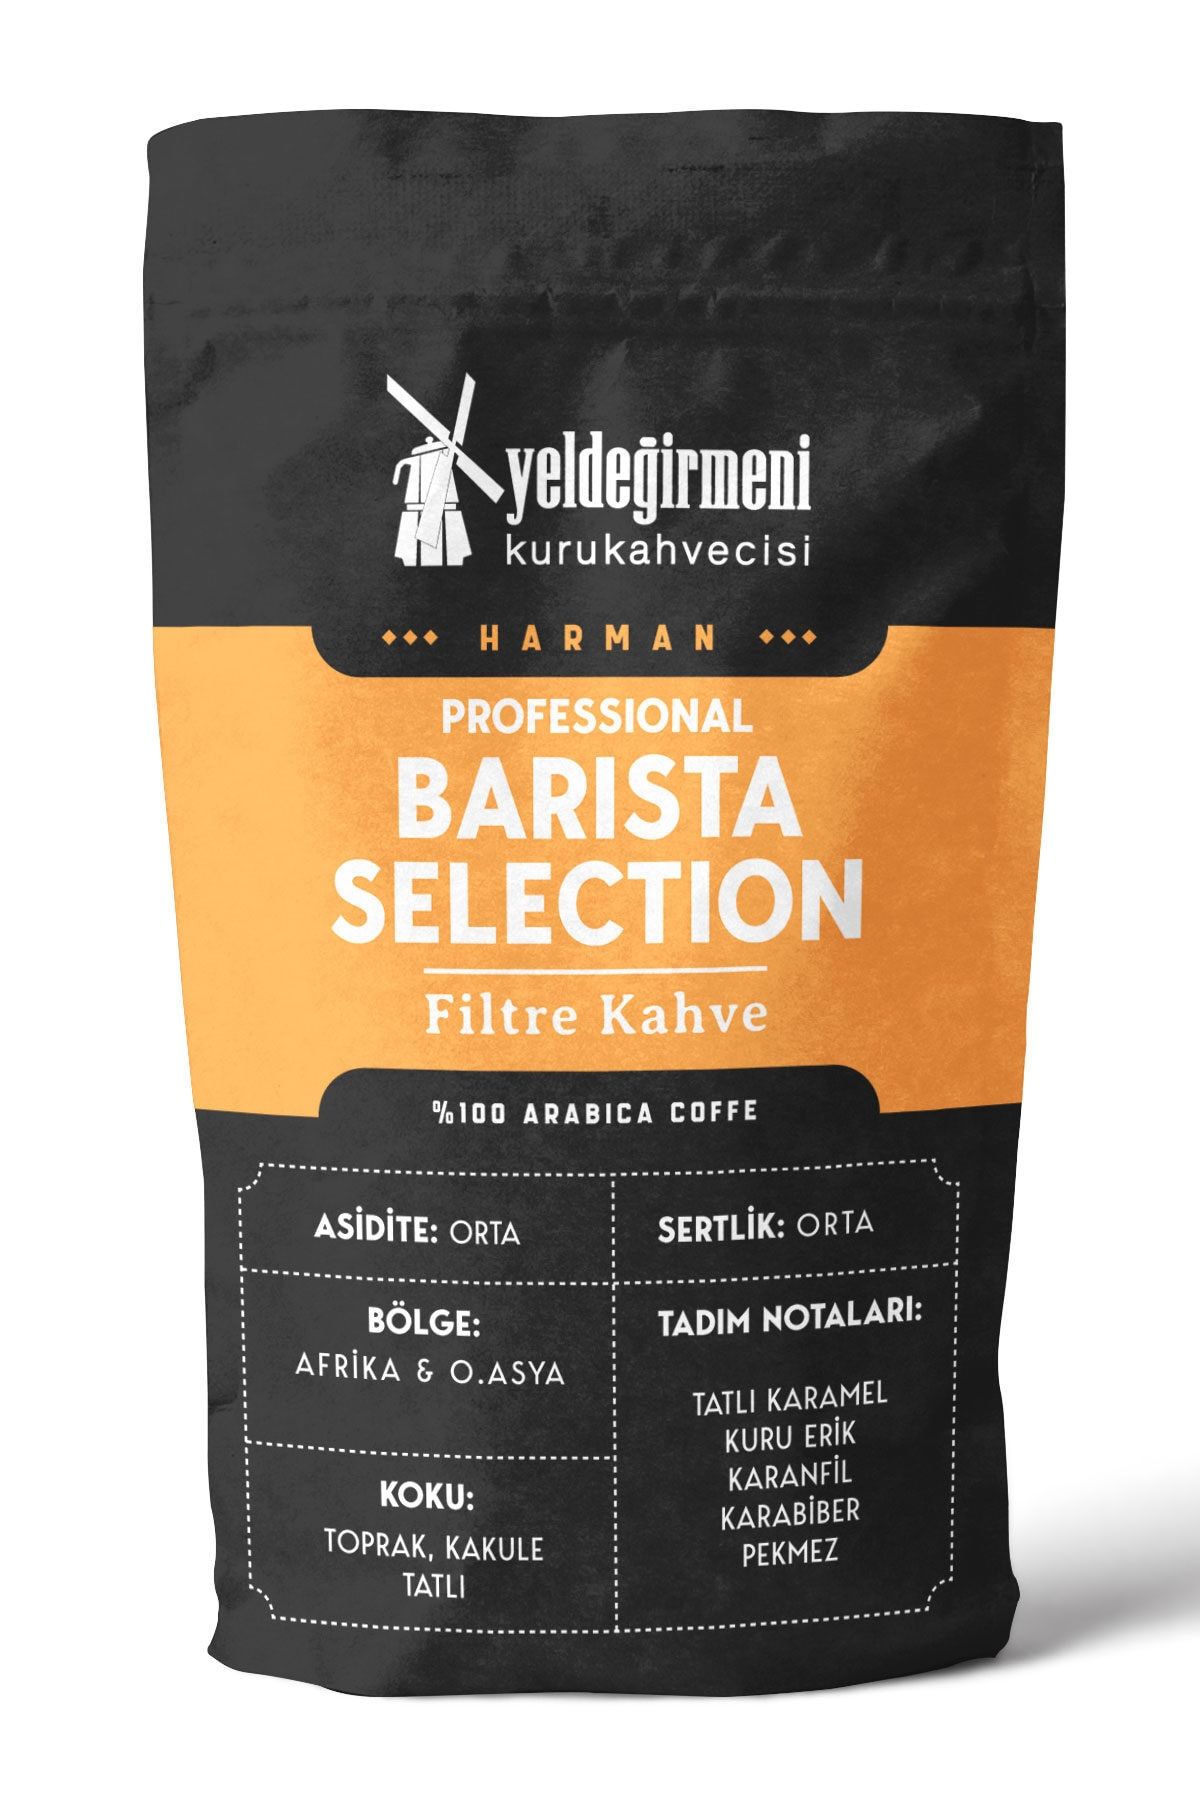 Yeldeğirmeni Kurukahvecisi Professional Barista Selection (filter Coffee) Filtre Kahve 1000 Gr